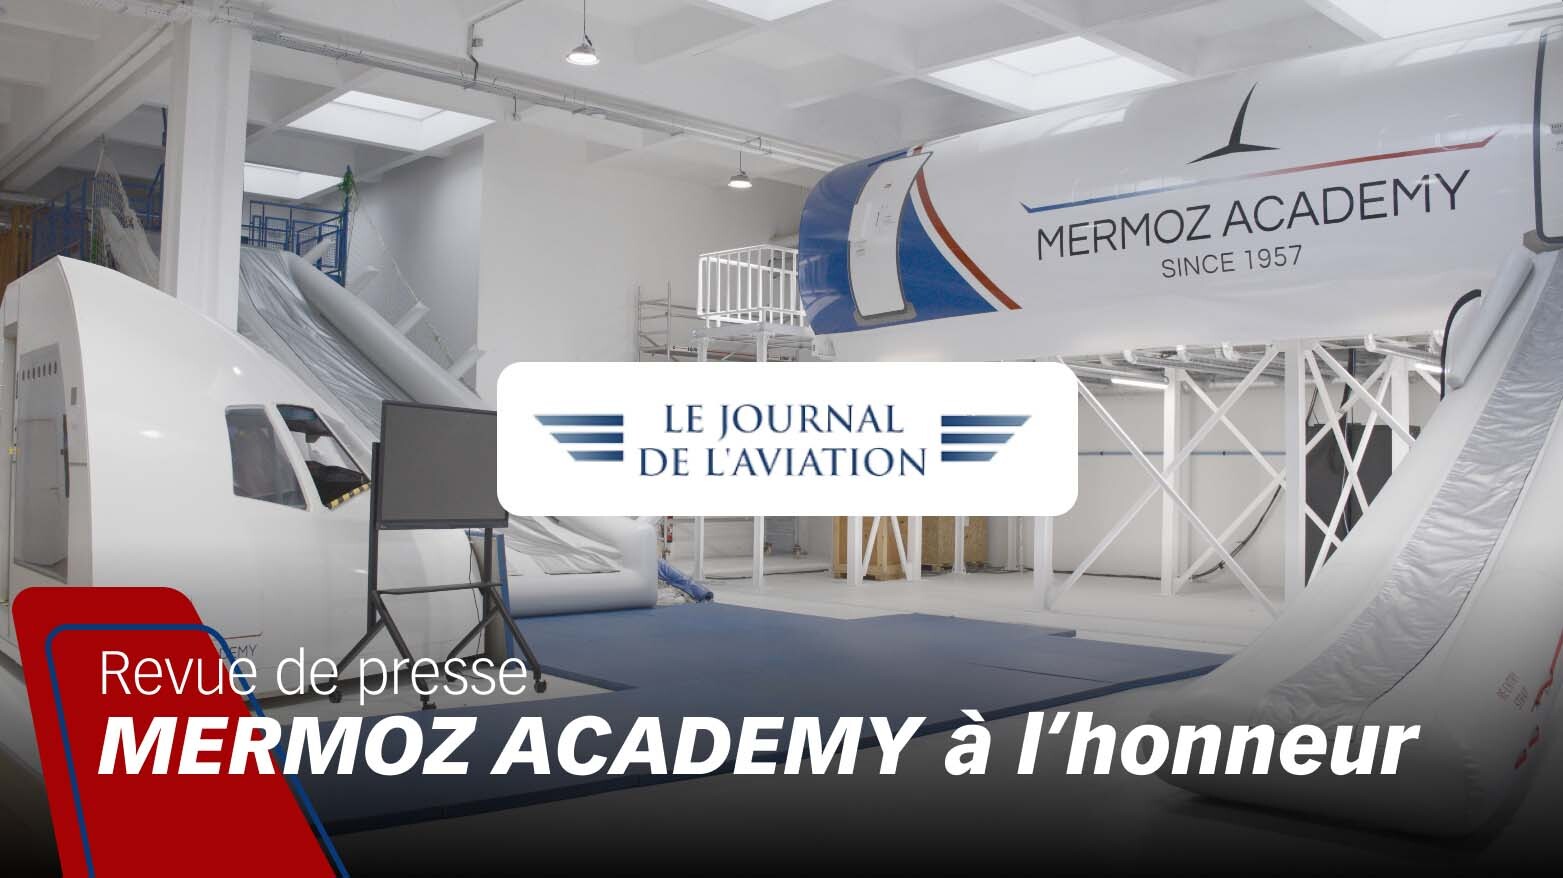 training center Orly Mermoz revue de presse journal de l'aviation